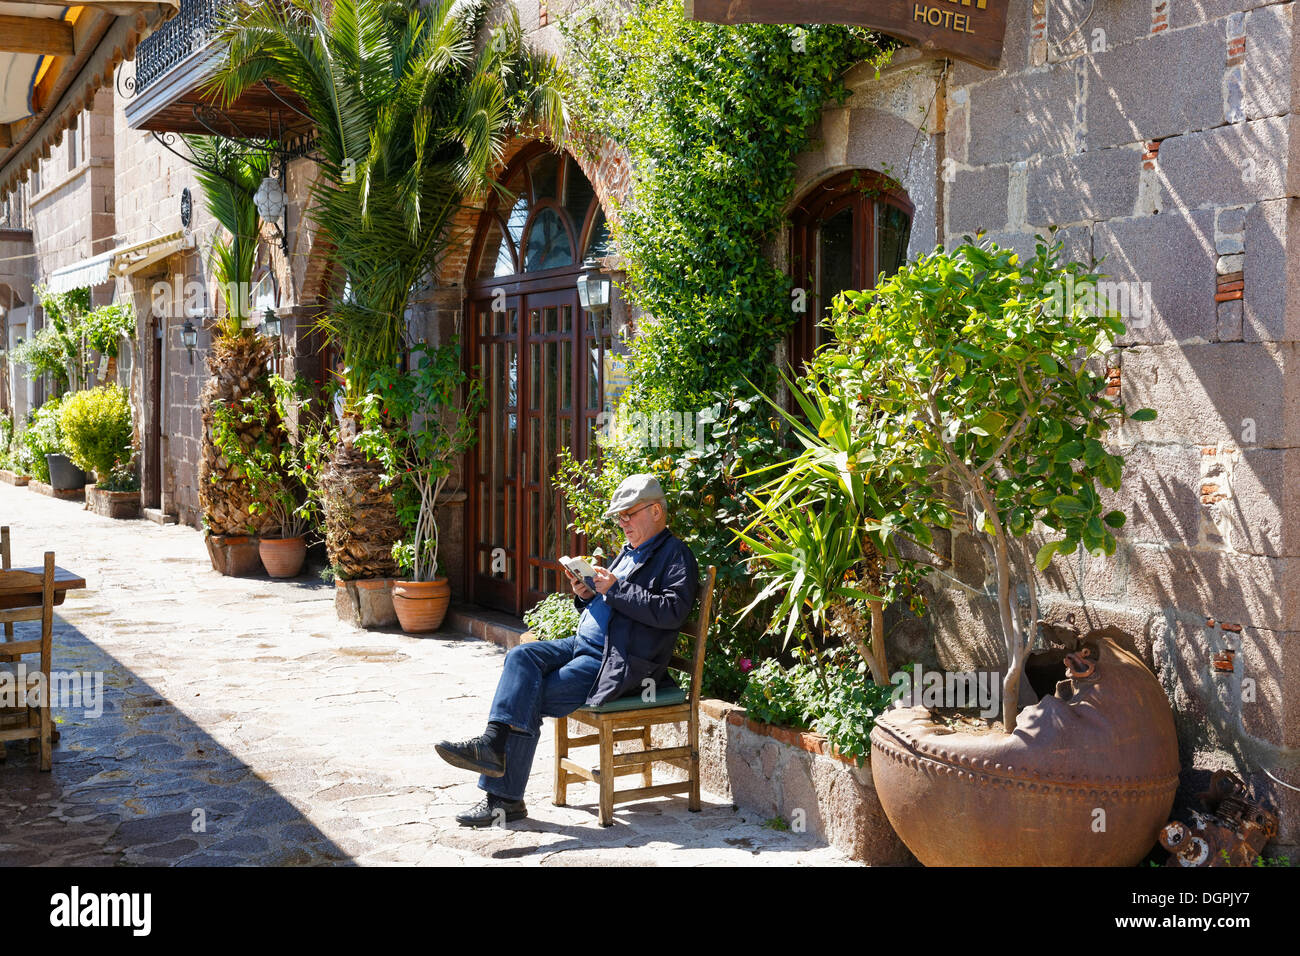 Uomo seduto su una sedia davanti a un hotel, Assos, Çanakkale provincia, regione di Marmara, Turchia Foto Stock